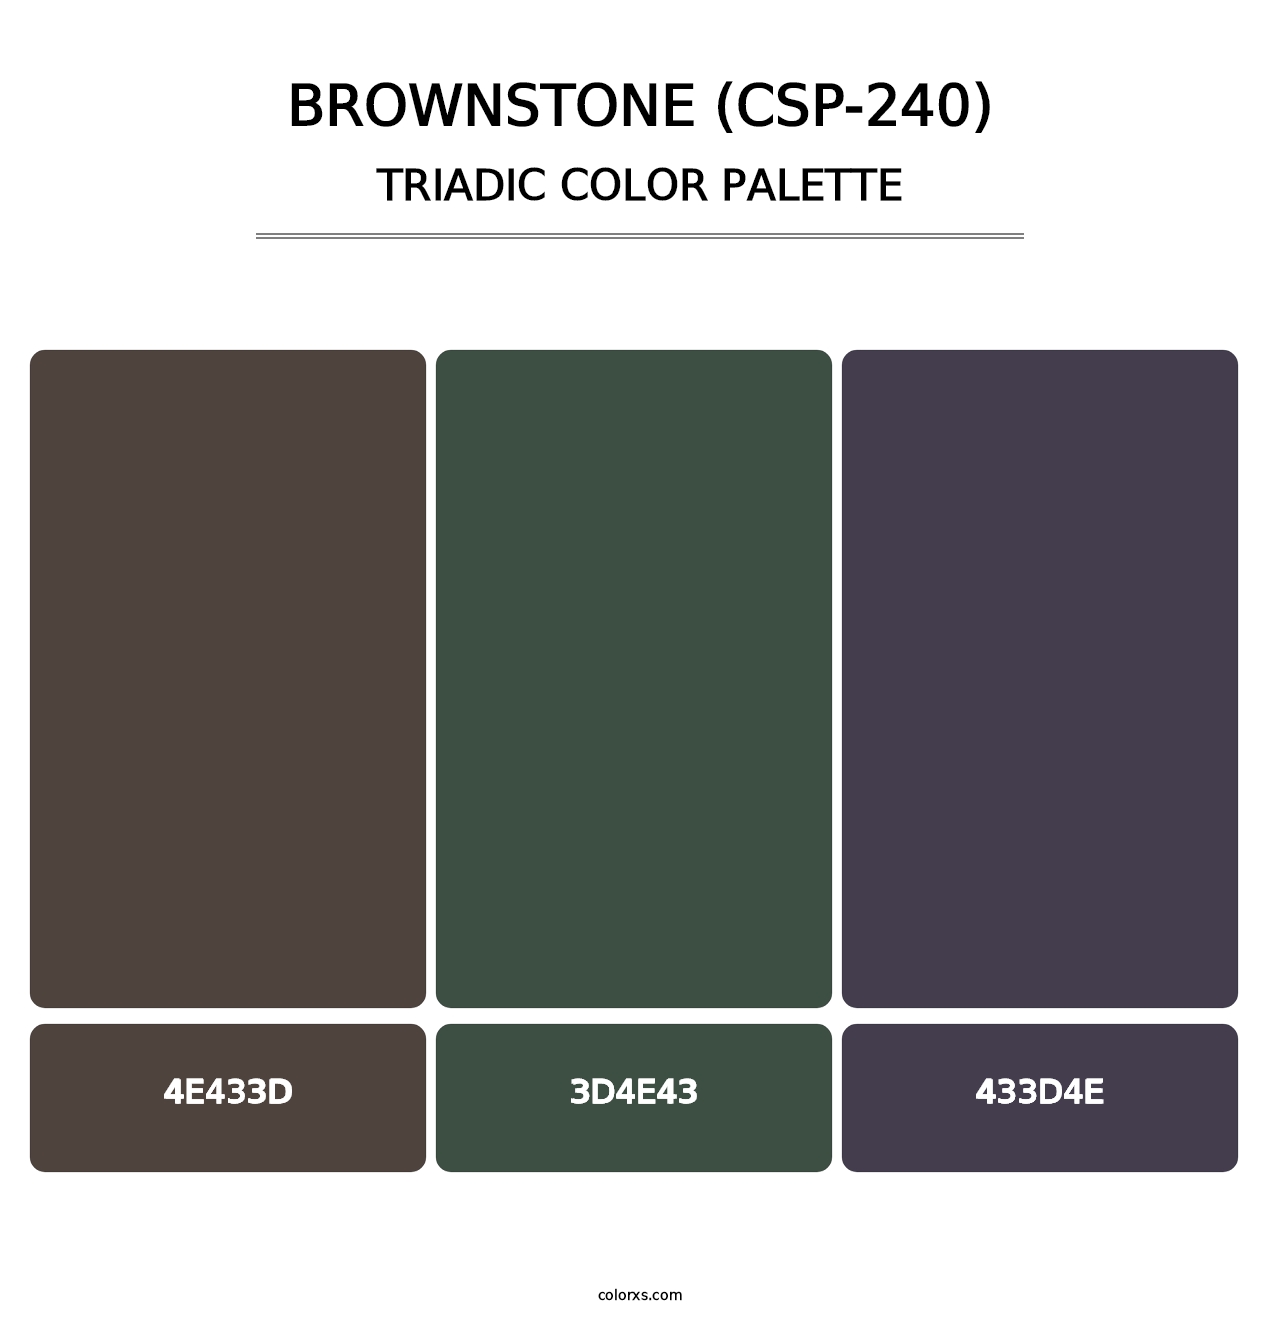 Brownstone (CSP-240) - Triadic Color Palette